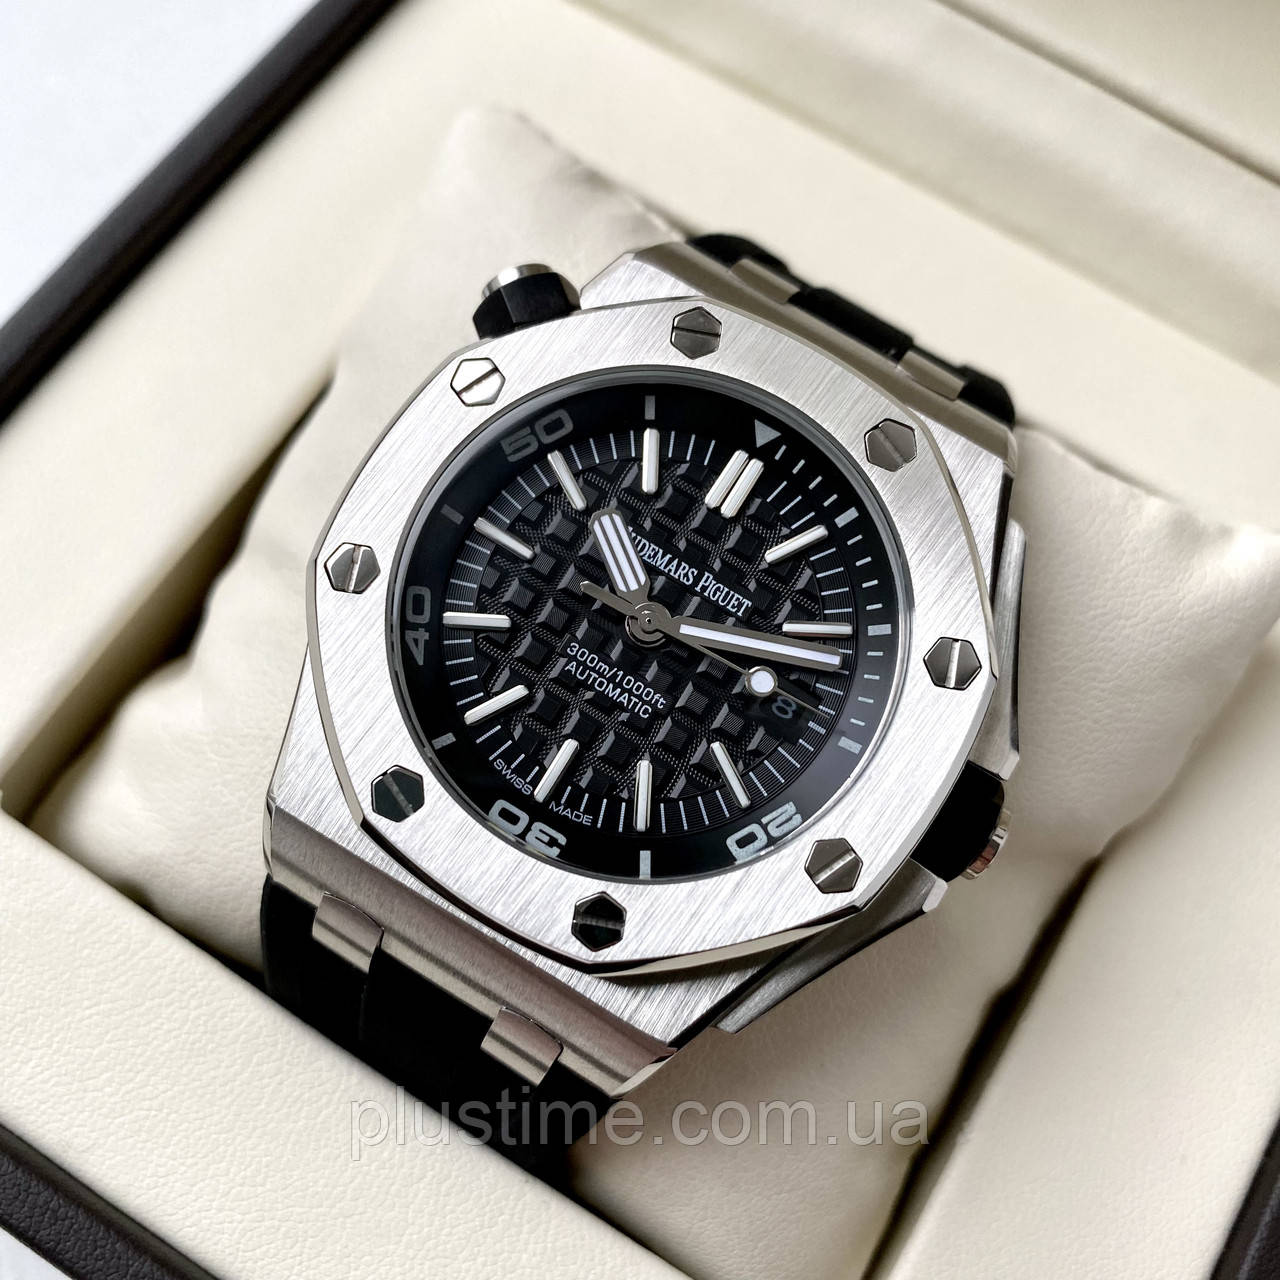 Чоловічі годинники Audemars Piguet Royal Oak Offshore Diver Silver AAA механічні з автопідзаводом і каучуком